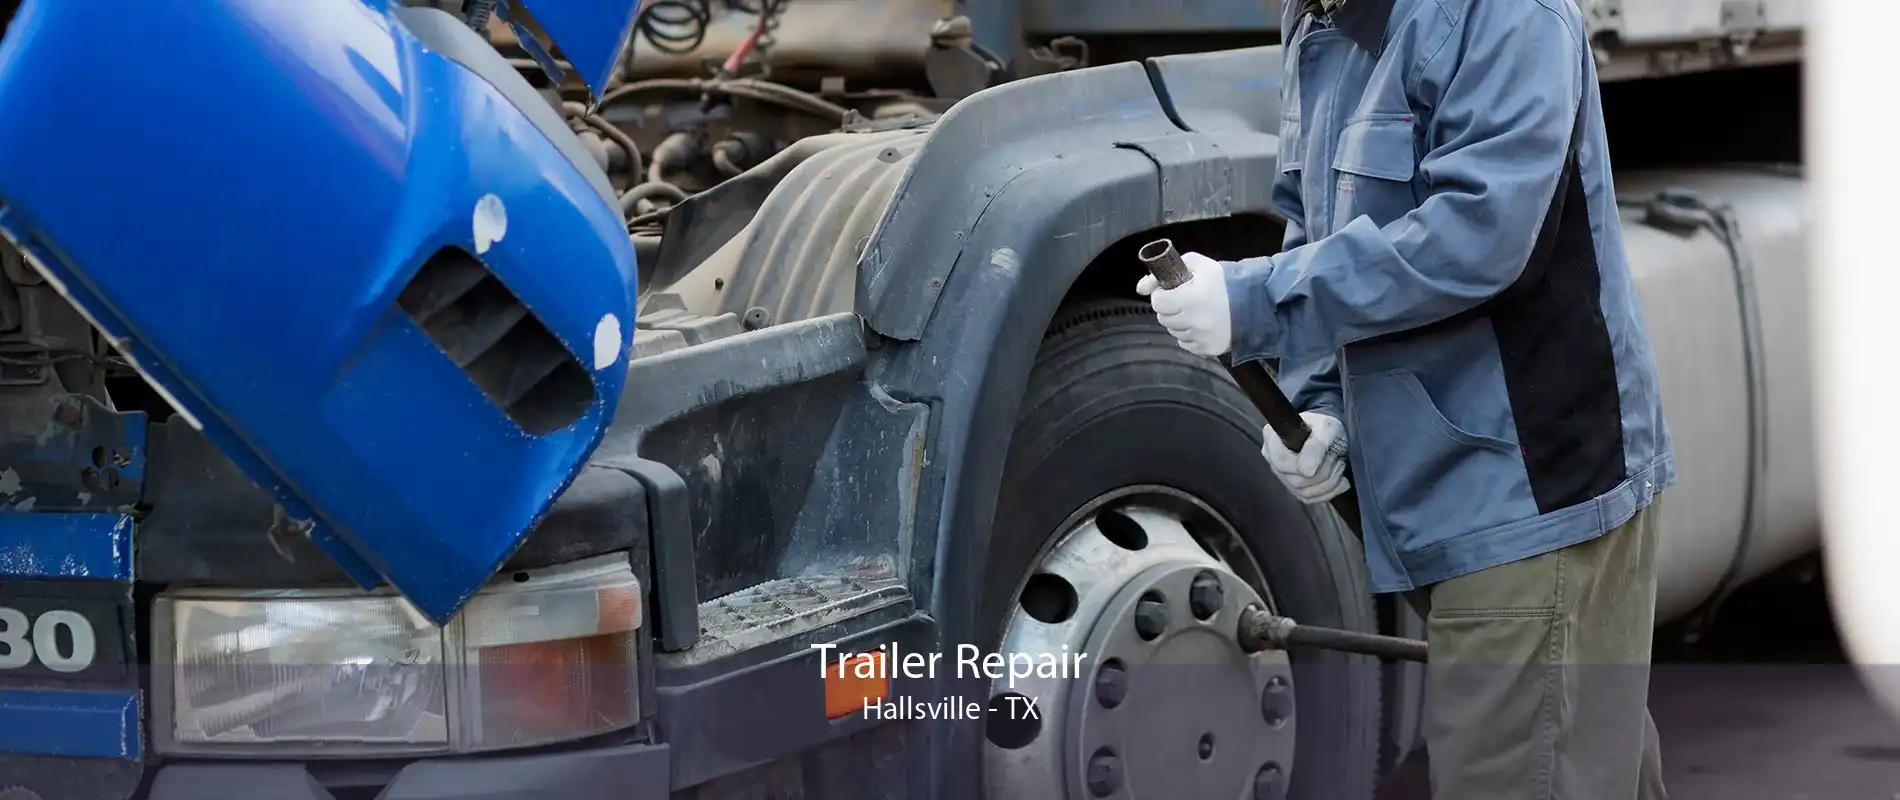 Trailer Repair Hallsville - TX